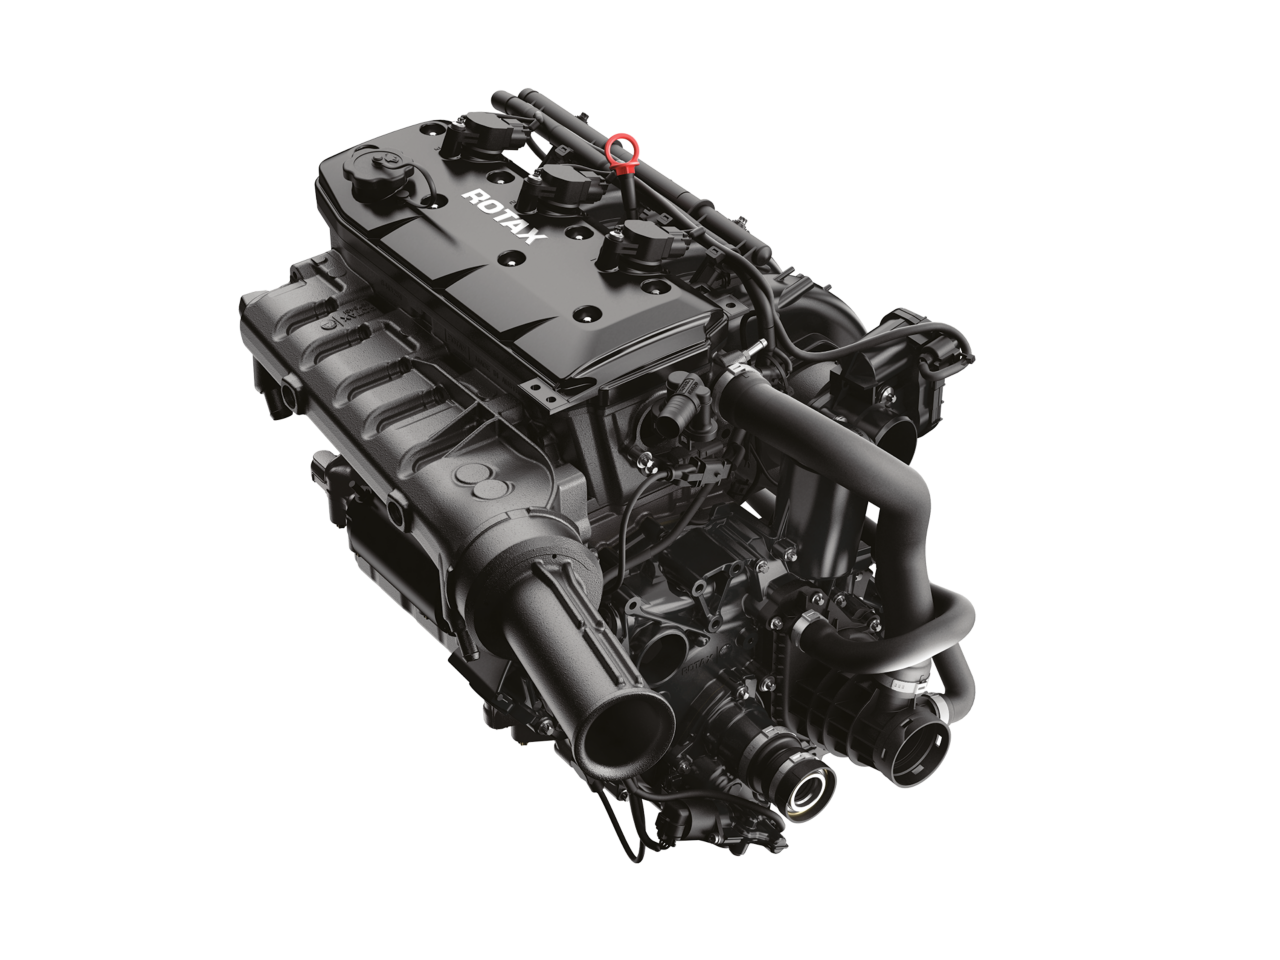 Sea My21 Rental Rotax Engine 1630 Website